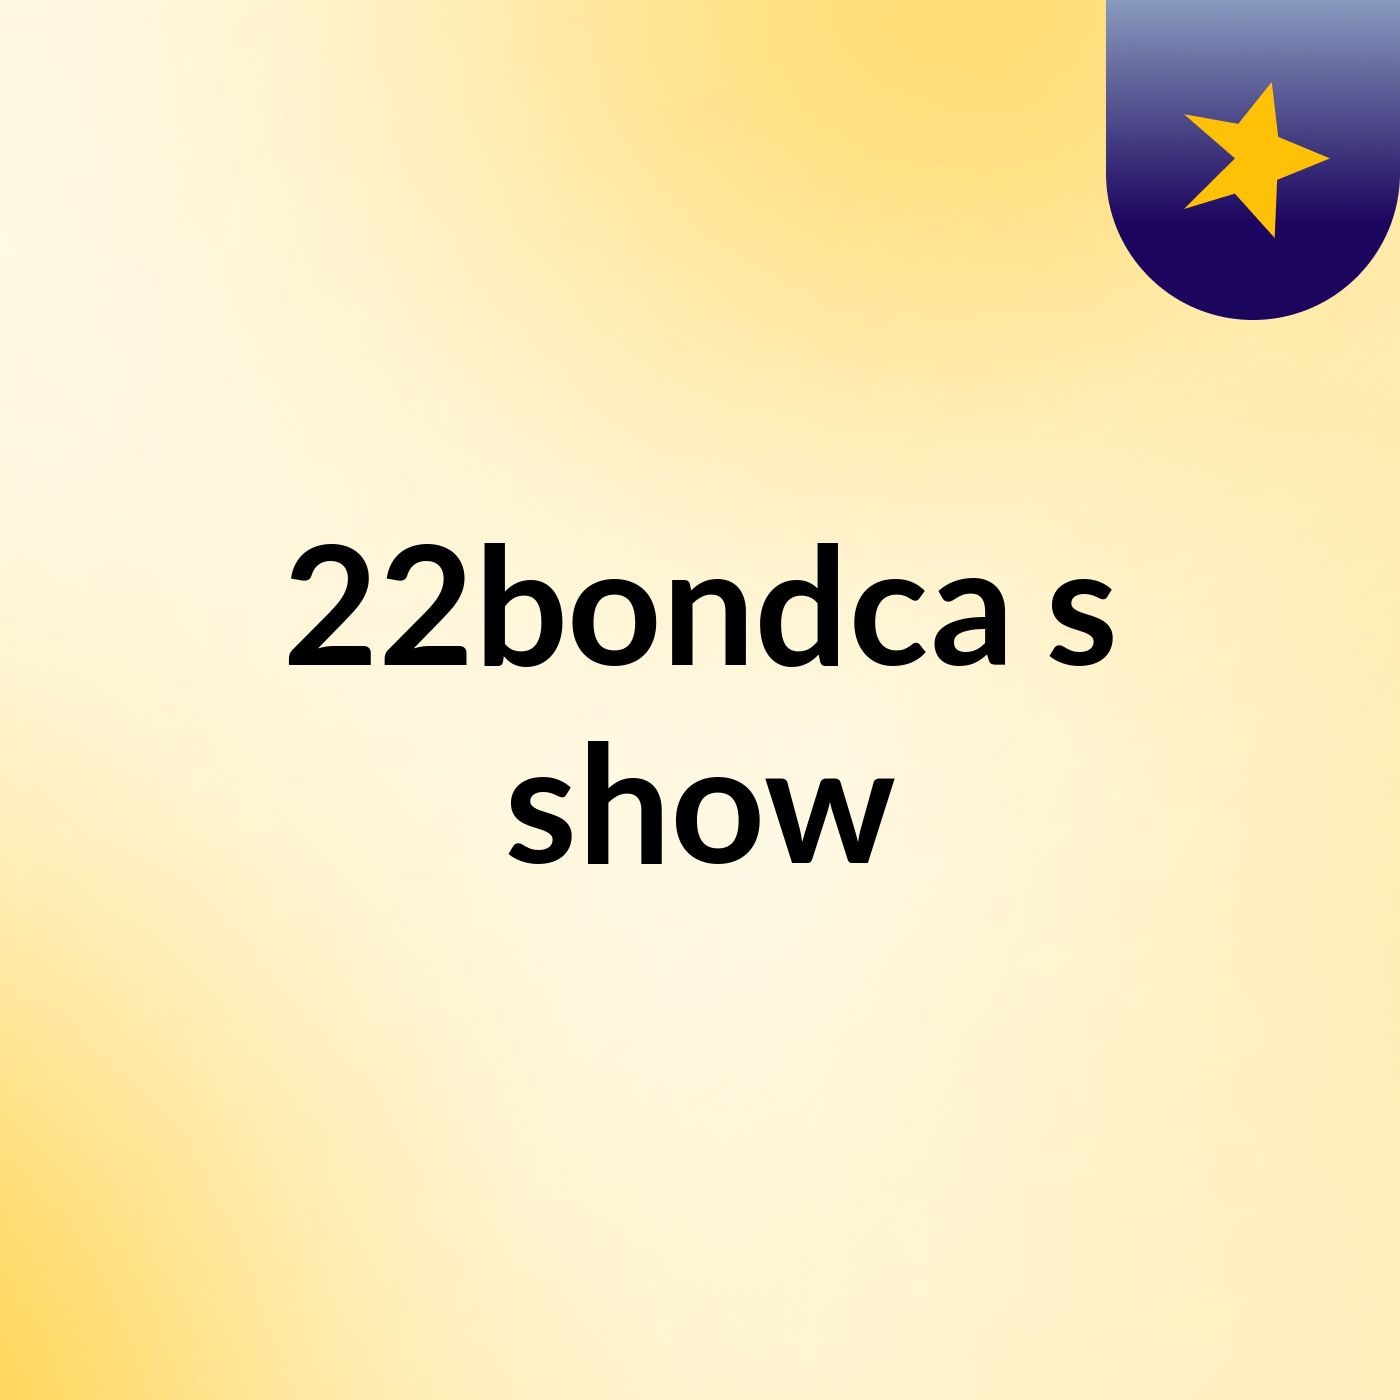 22bondca's show